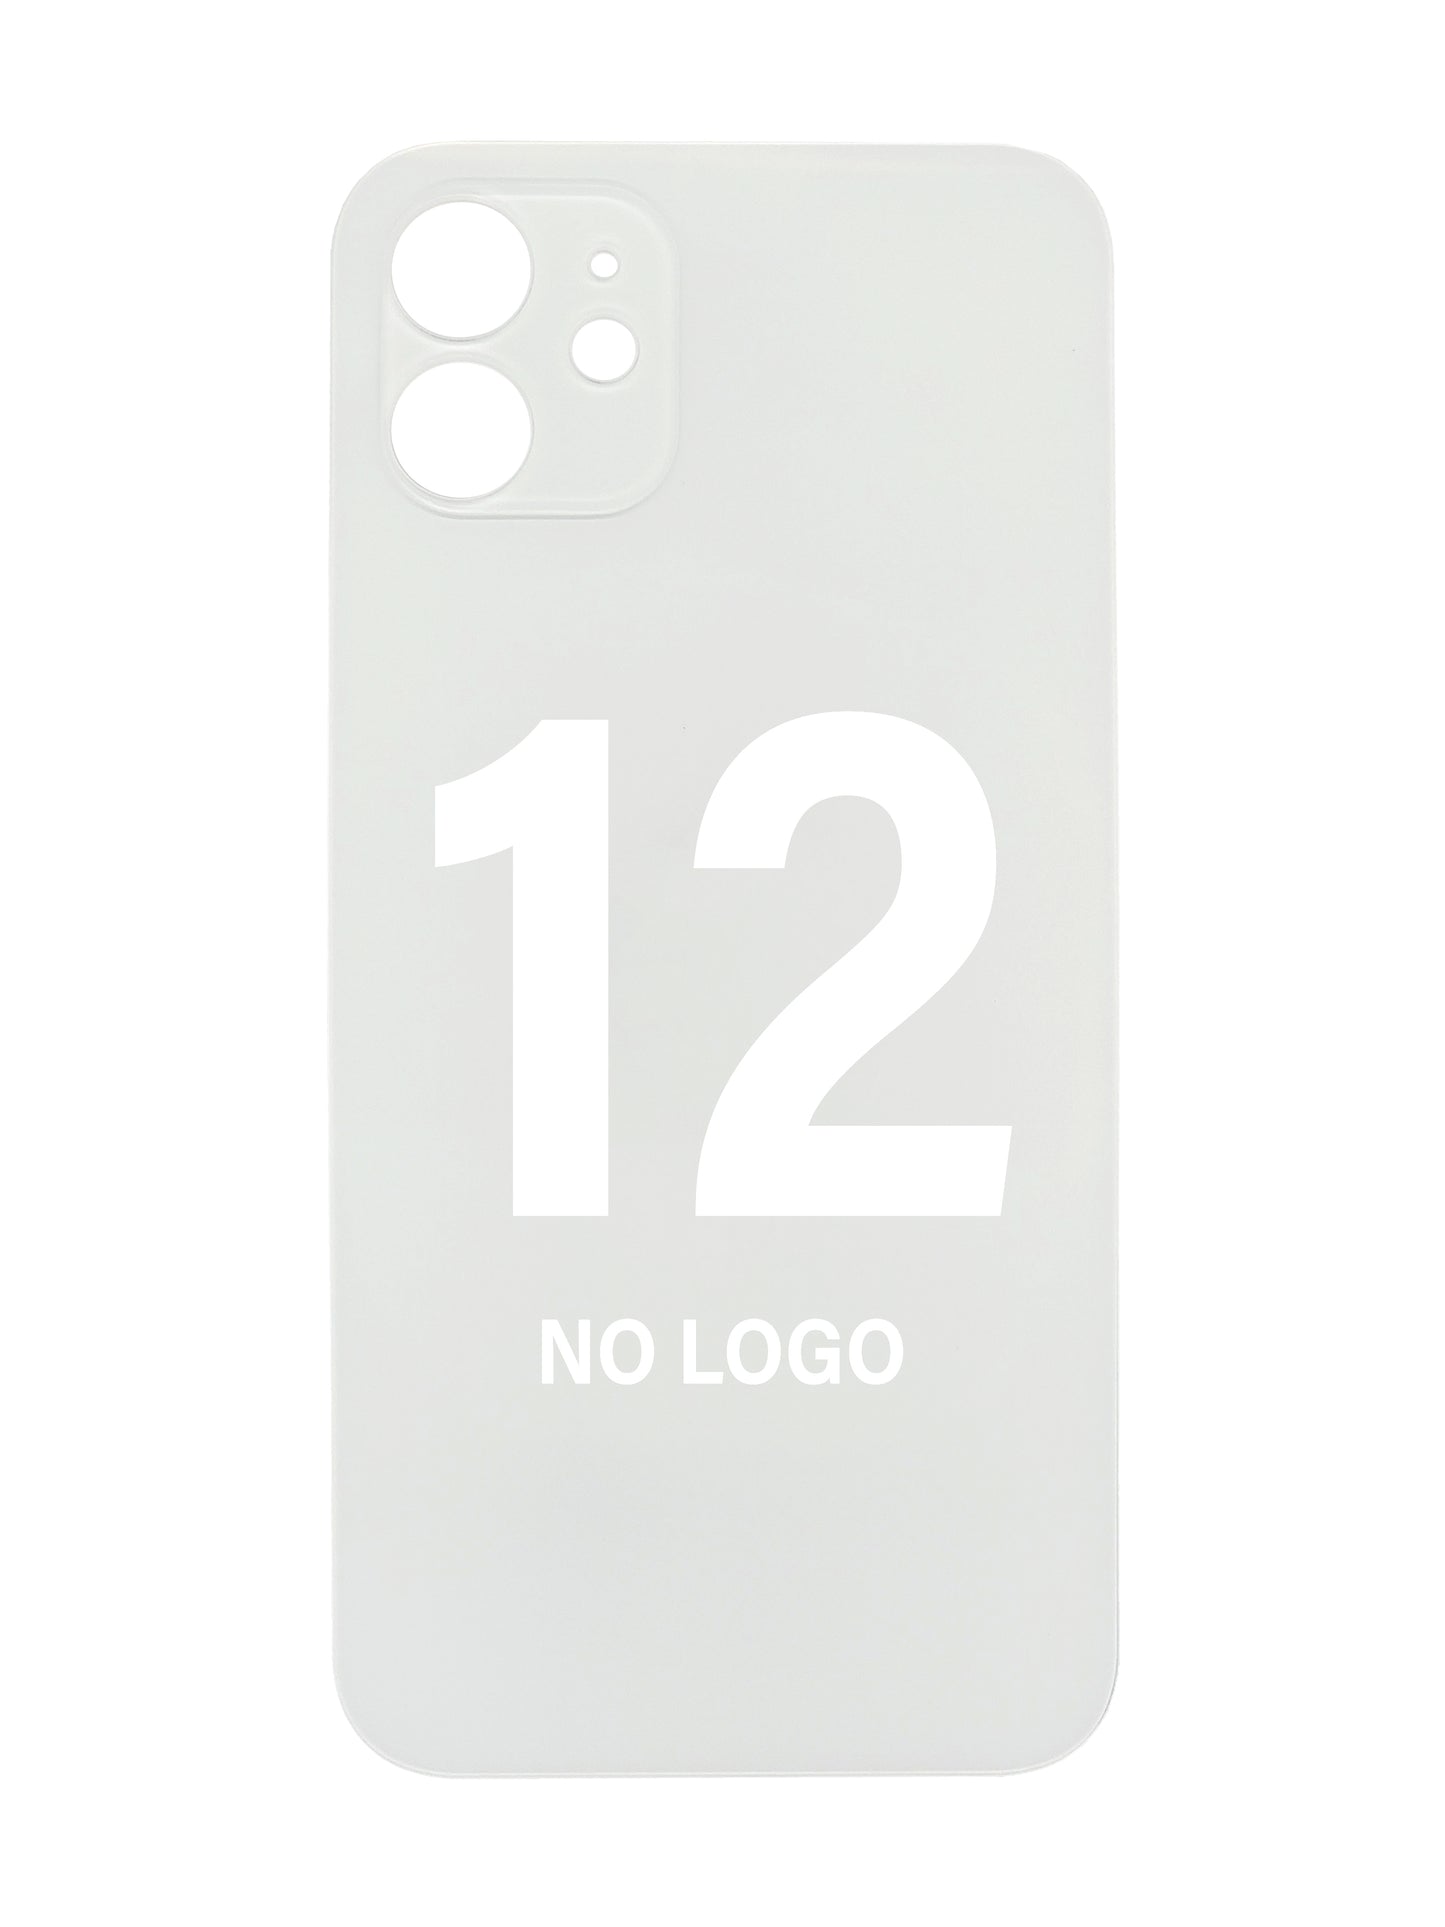 iPhone 12 Back Glass (No Logo) (White)